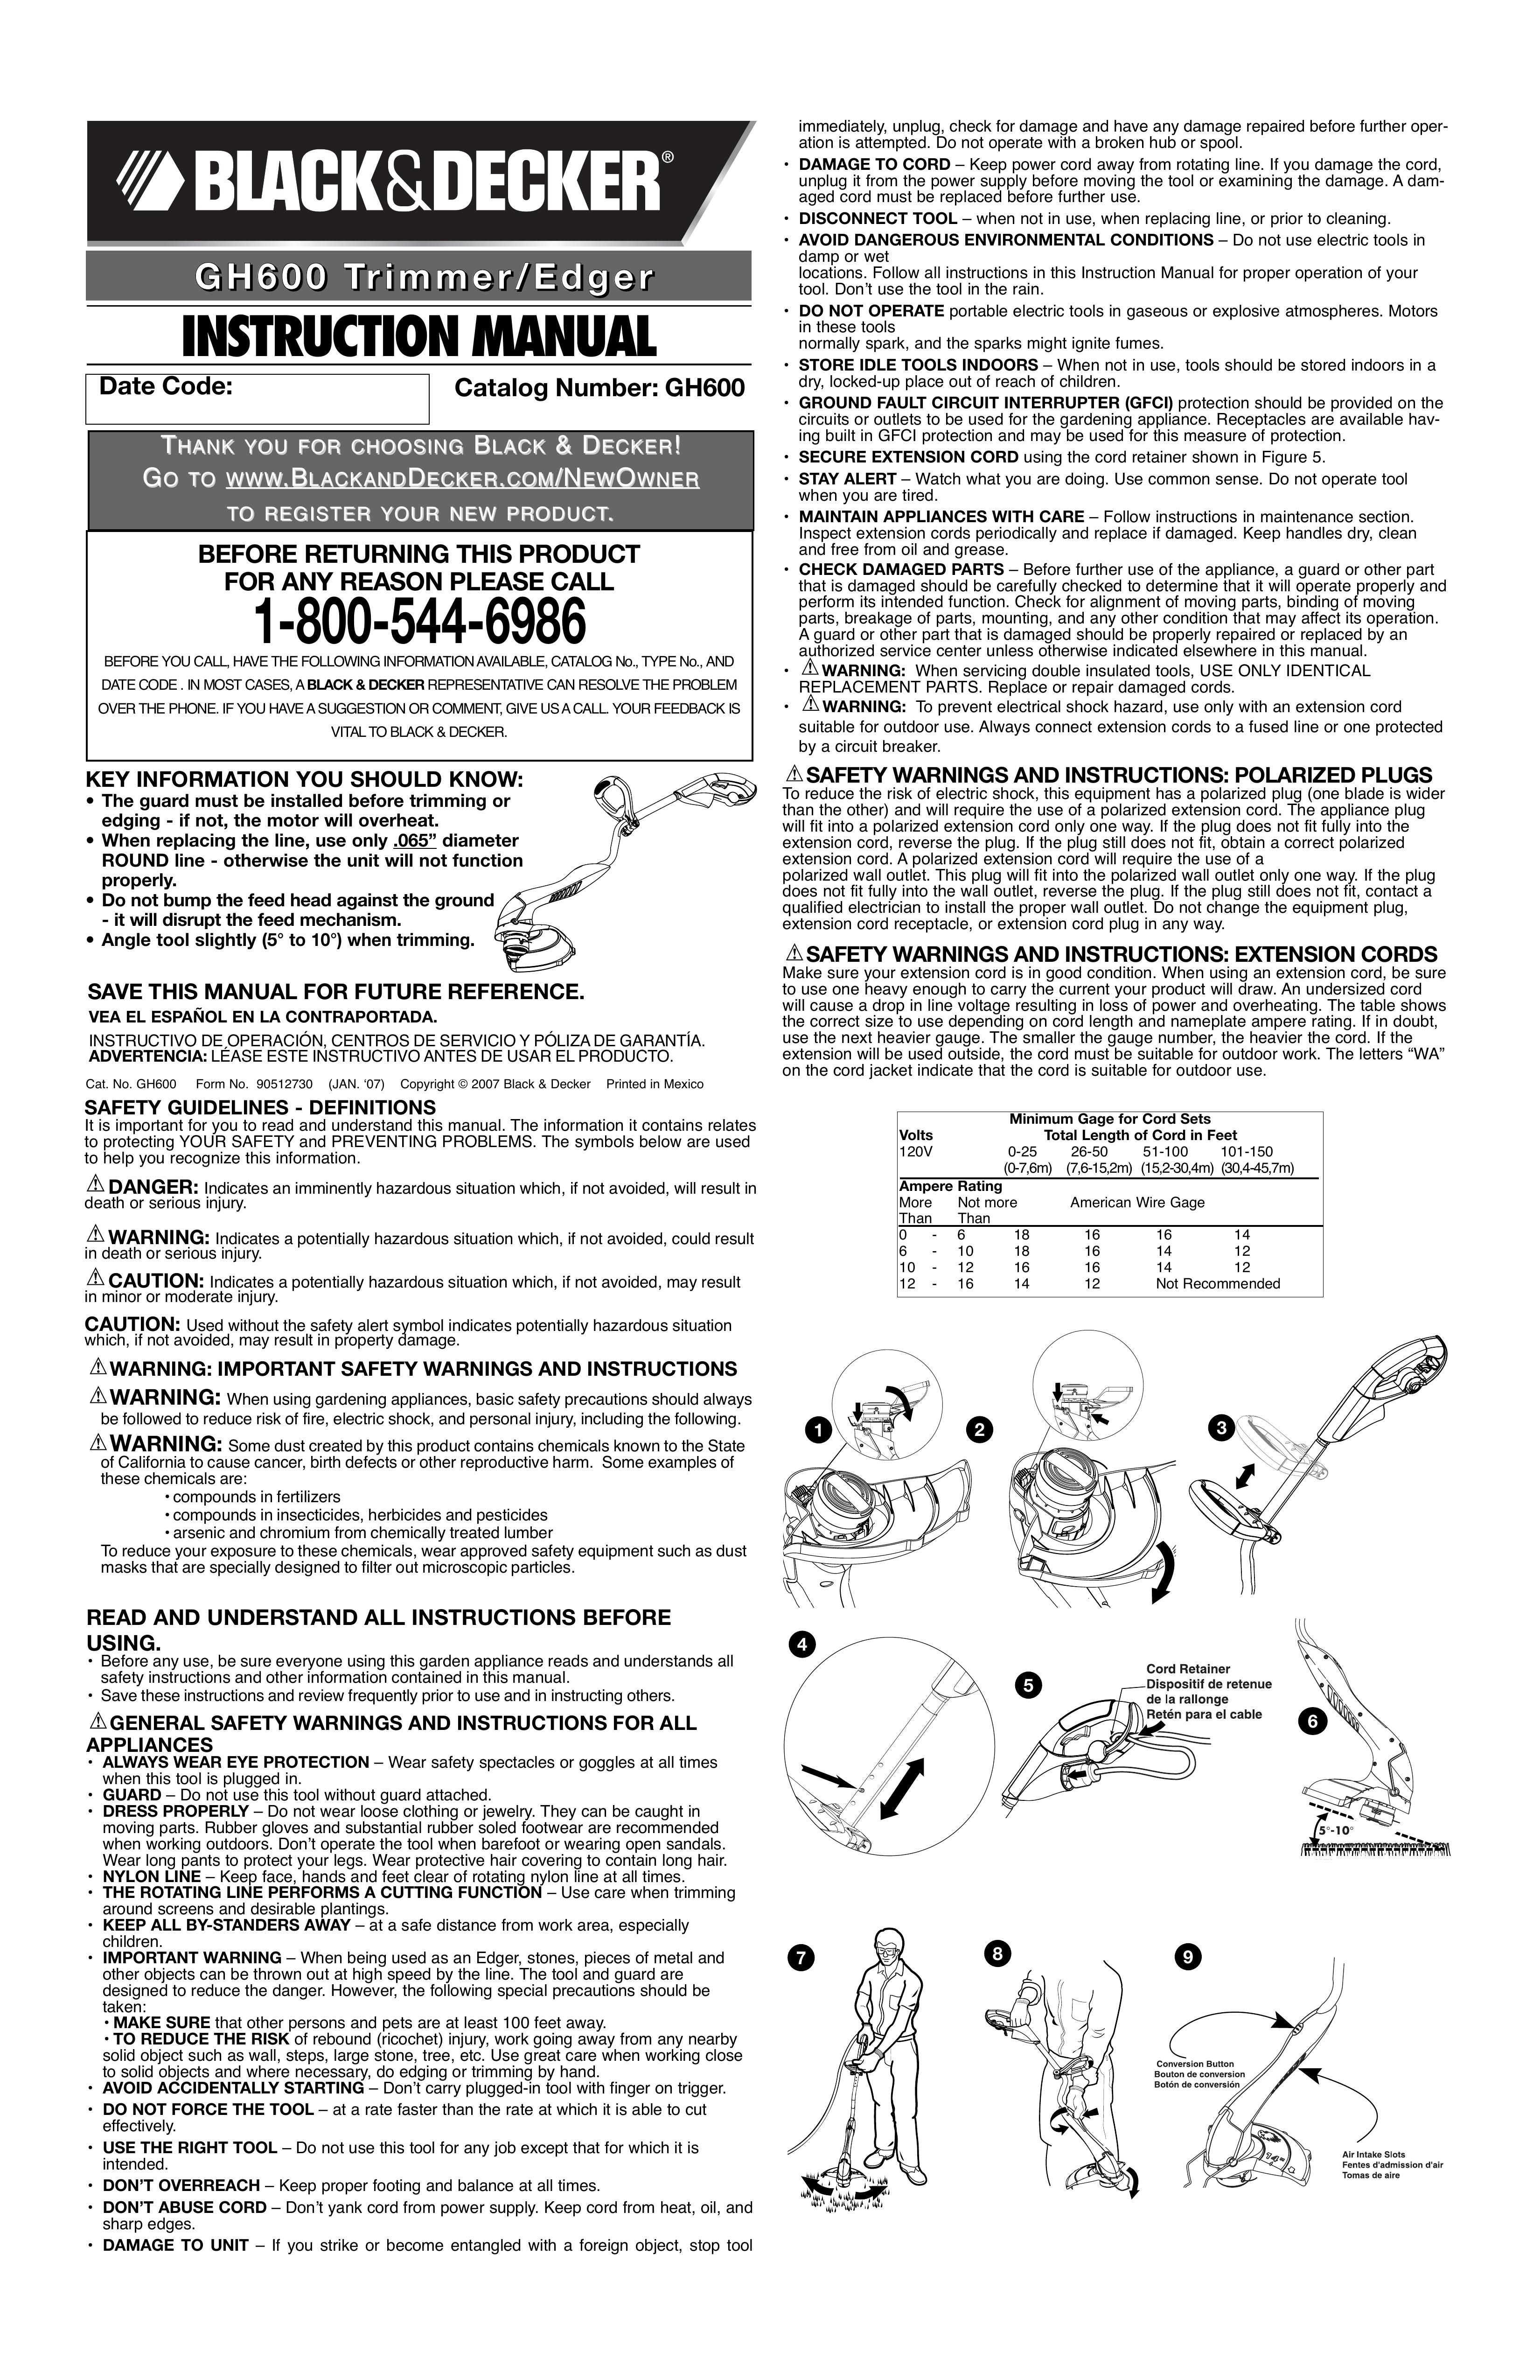 Black & Decker 90512730 Trimmer User Manual